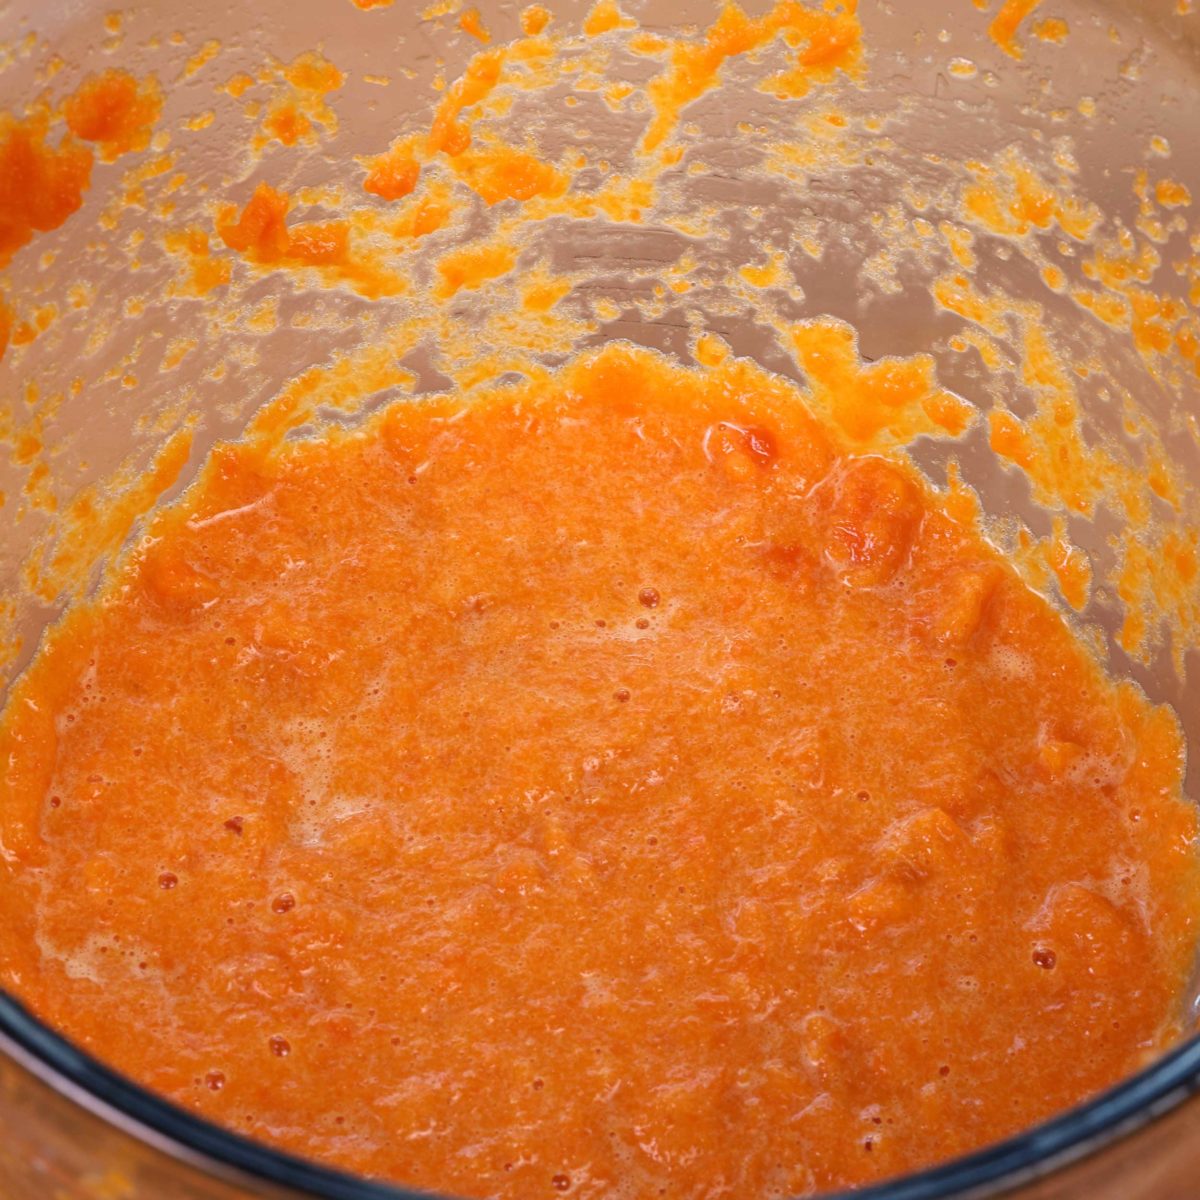 pureed carrots, sugar, egg, baking powder and flour in a mixing bowl.